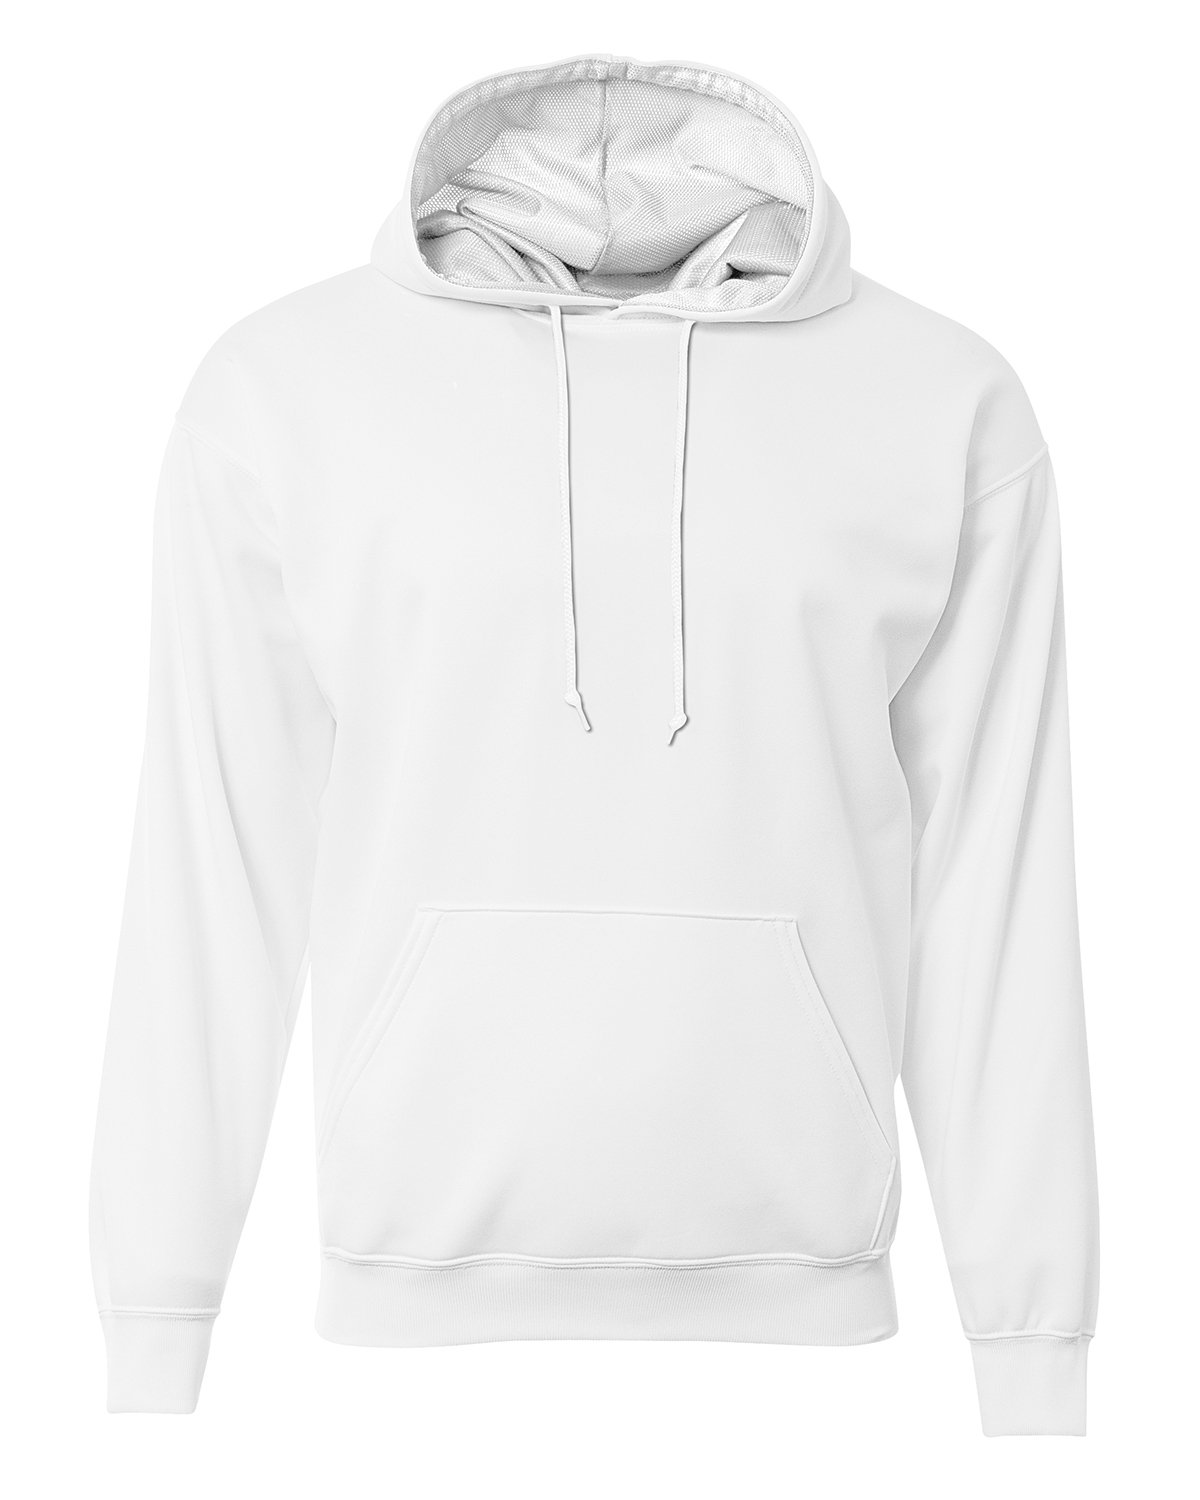 A4 Men's Sprint Tech Fleece Hooded Sweatshirt WHITE 